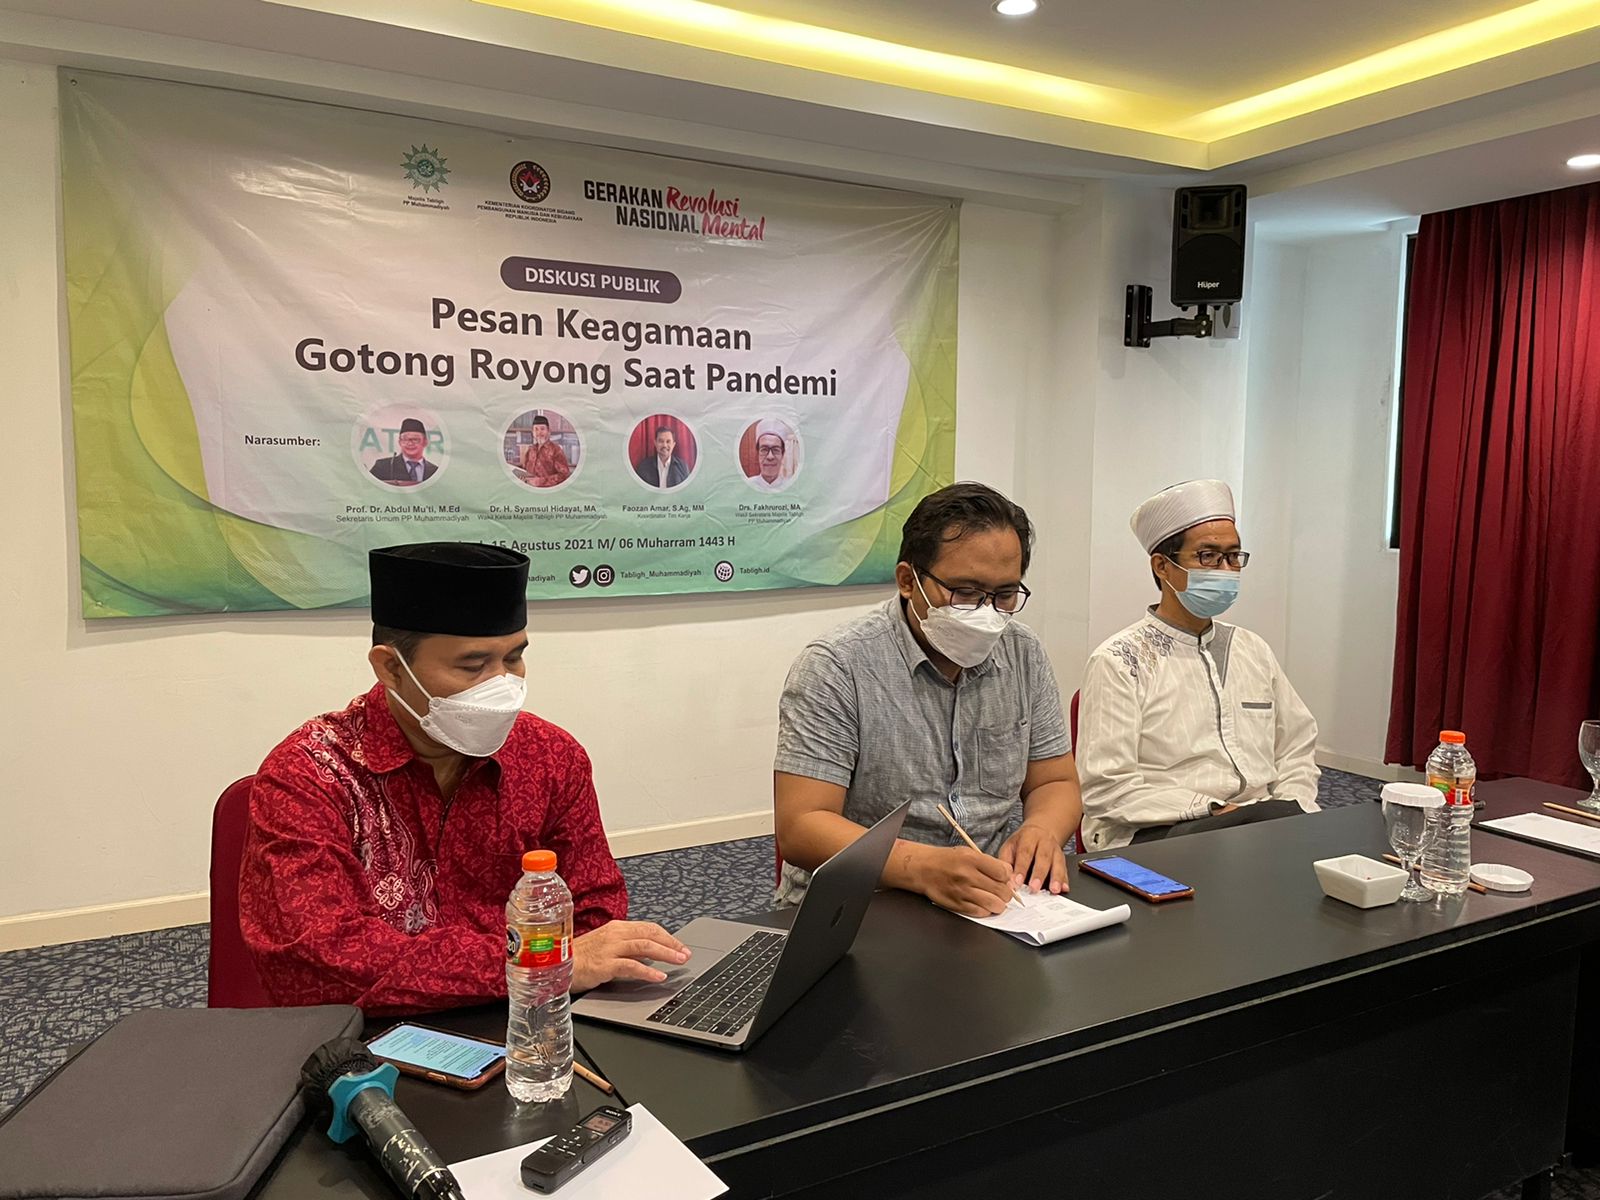 Diskusi Publik dengan tema 'Pesan Keagamaan Gotong Royong Saat Pandemi' yang digelar Majelis Tabligh Pimpinan Pusat Muhammadiyah.